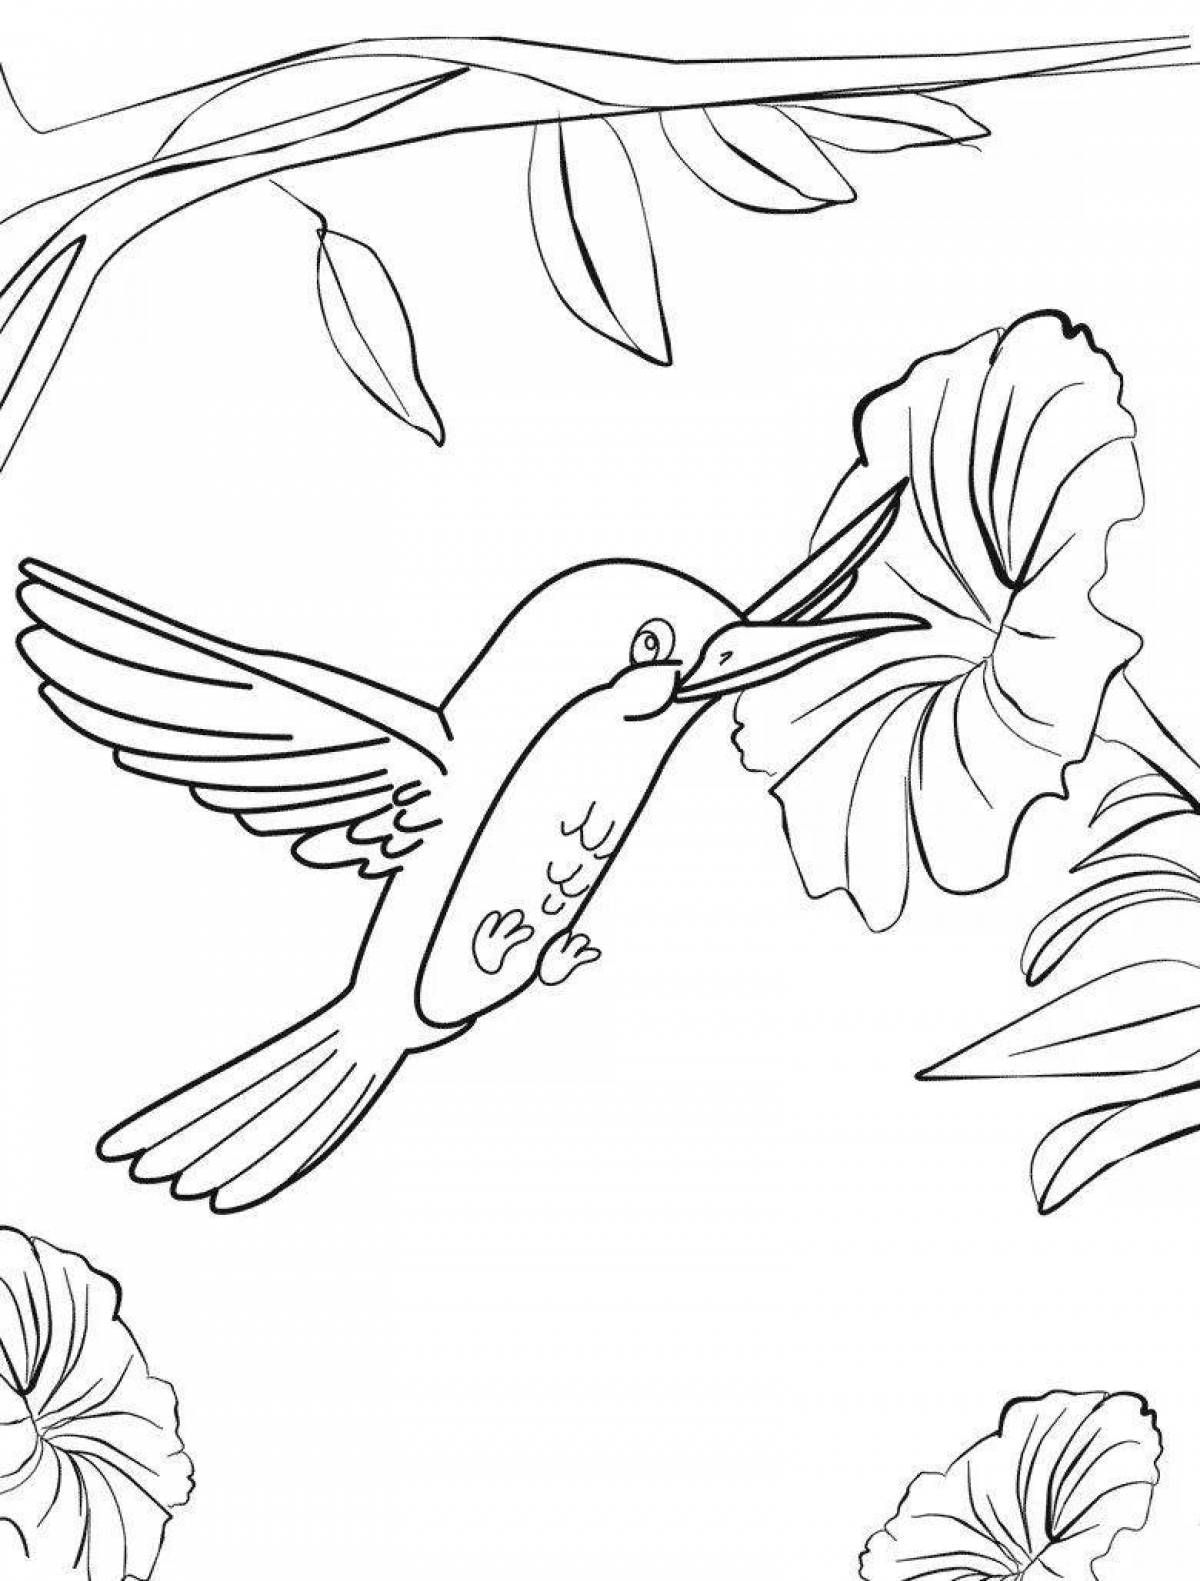 Mystical hummingbird coloring book for kids